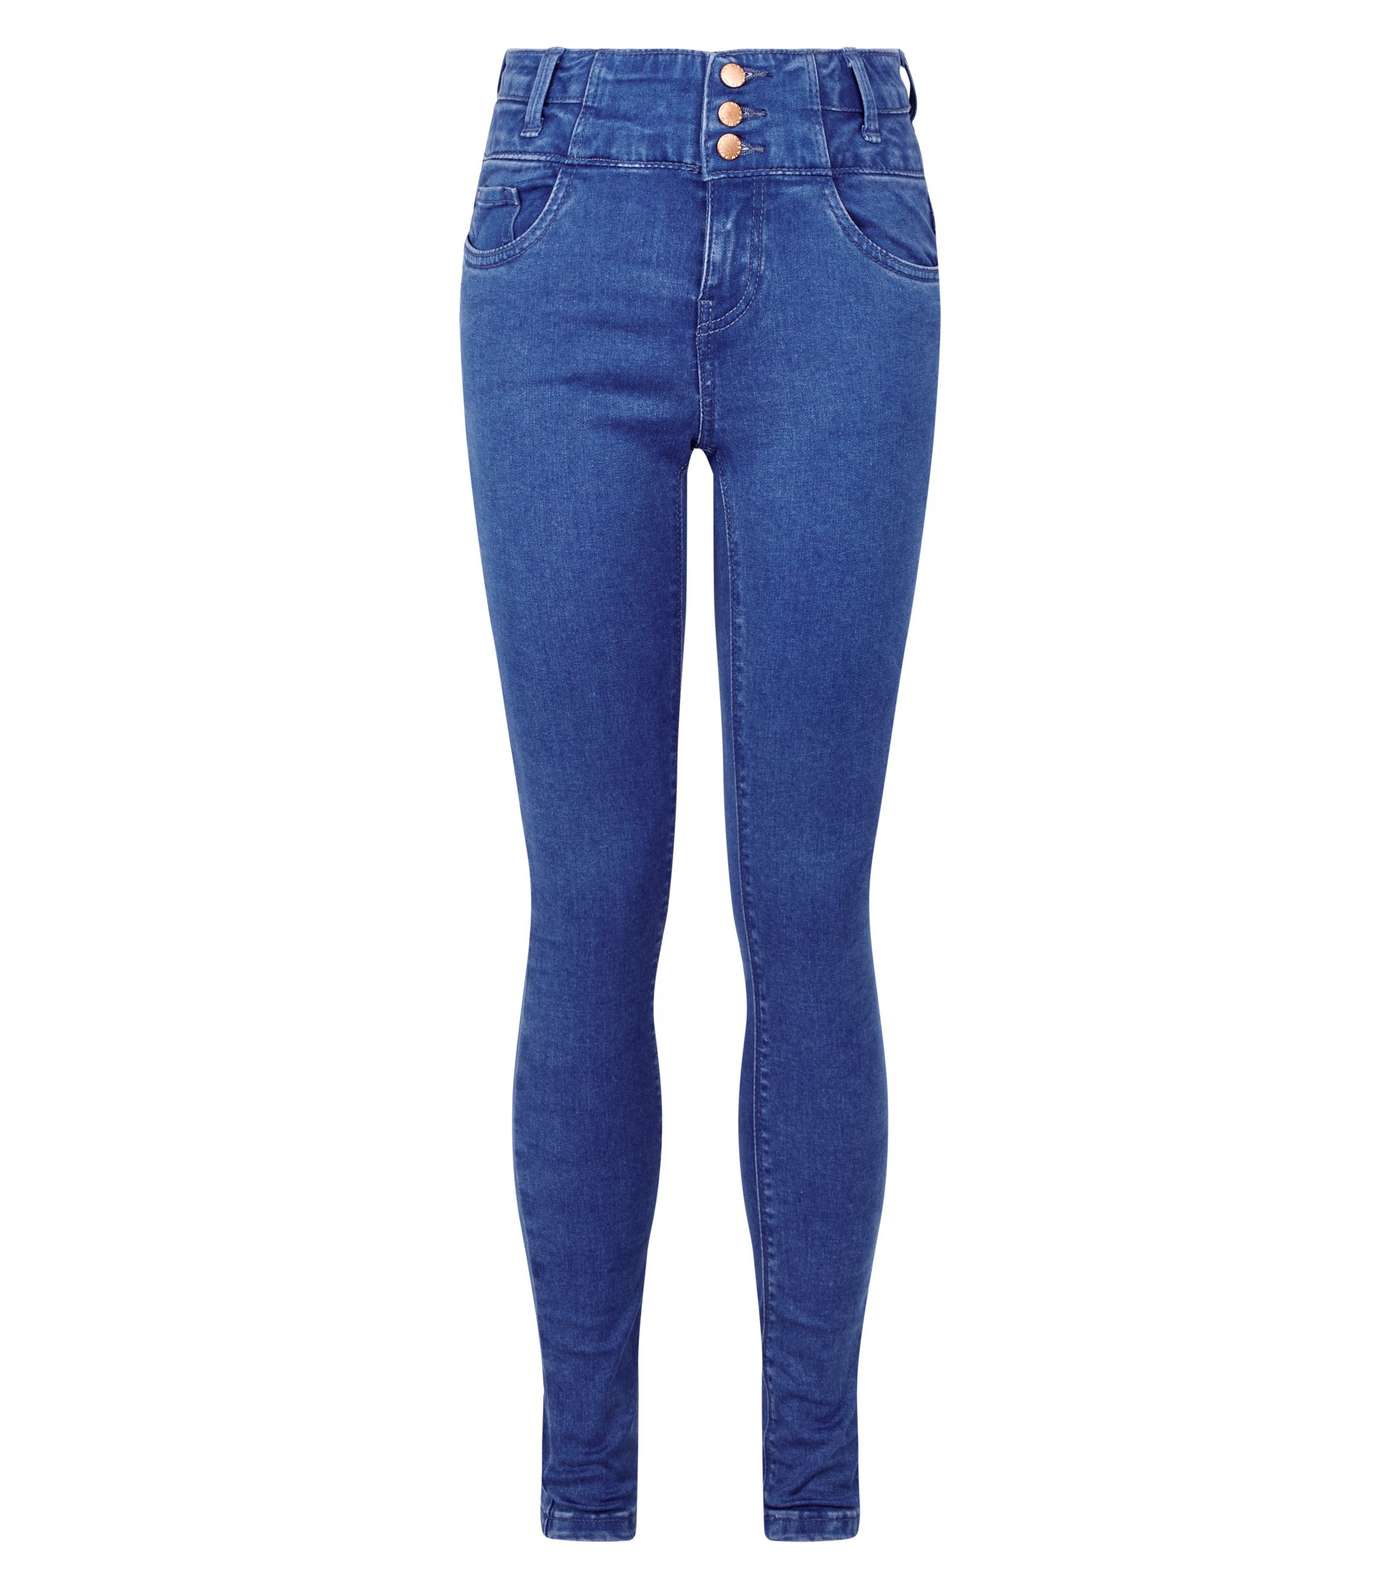 Girls Bright Blue High Waist Skinny Jeans Image 4